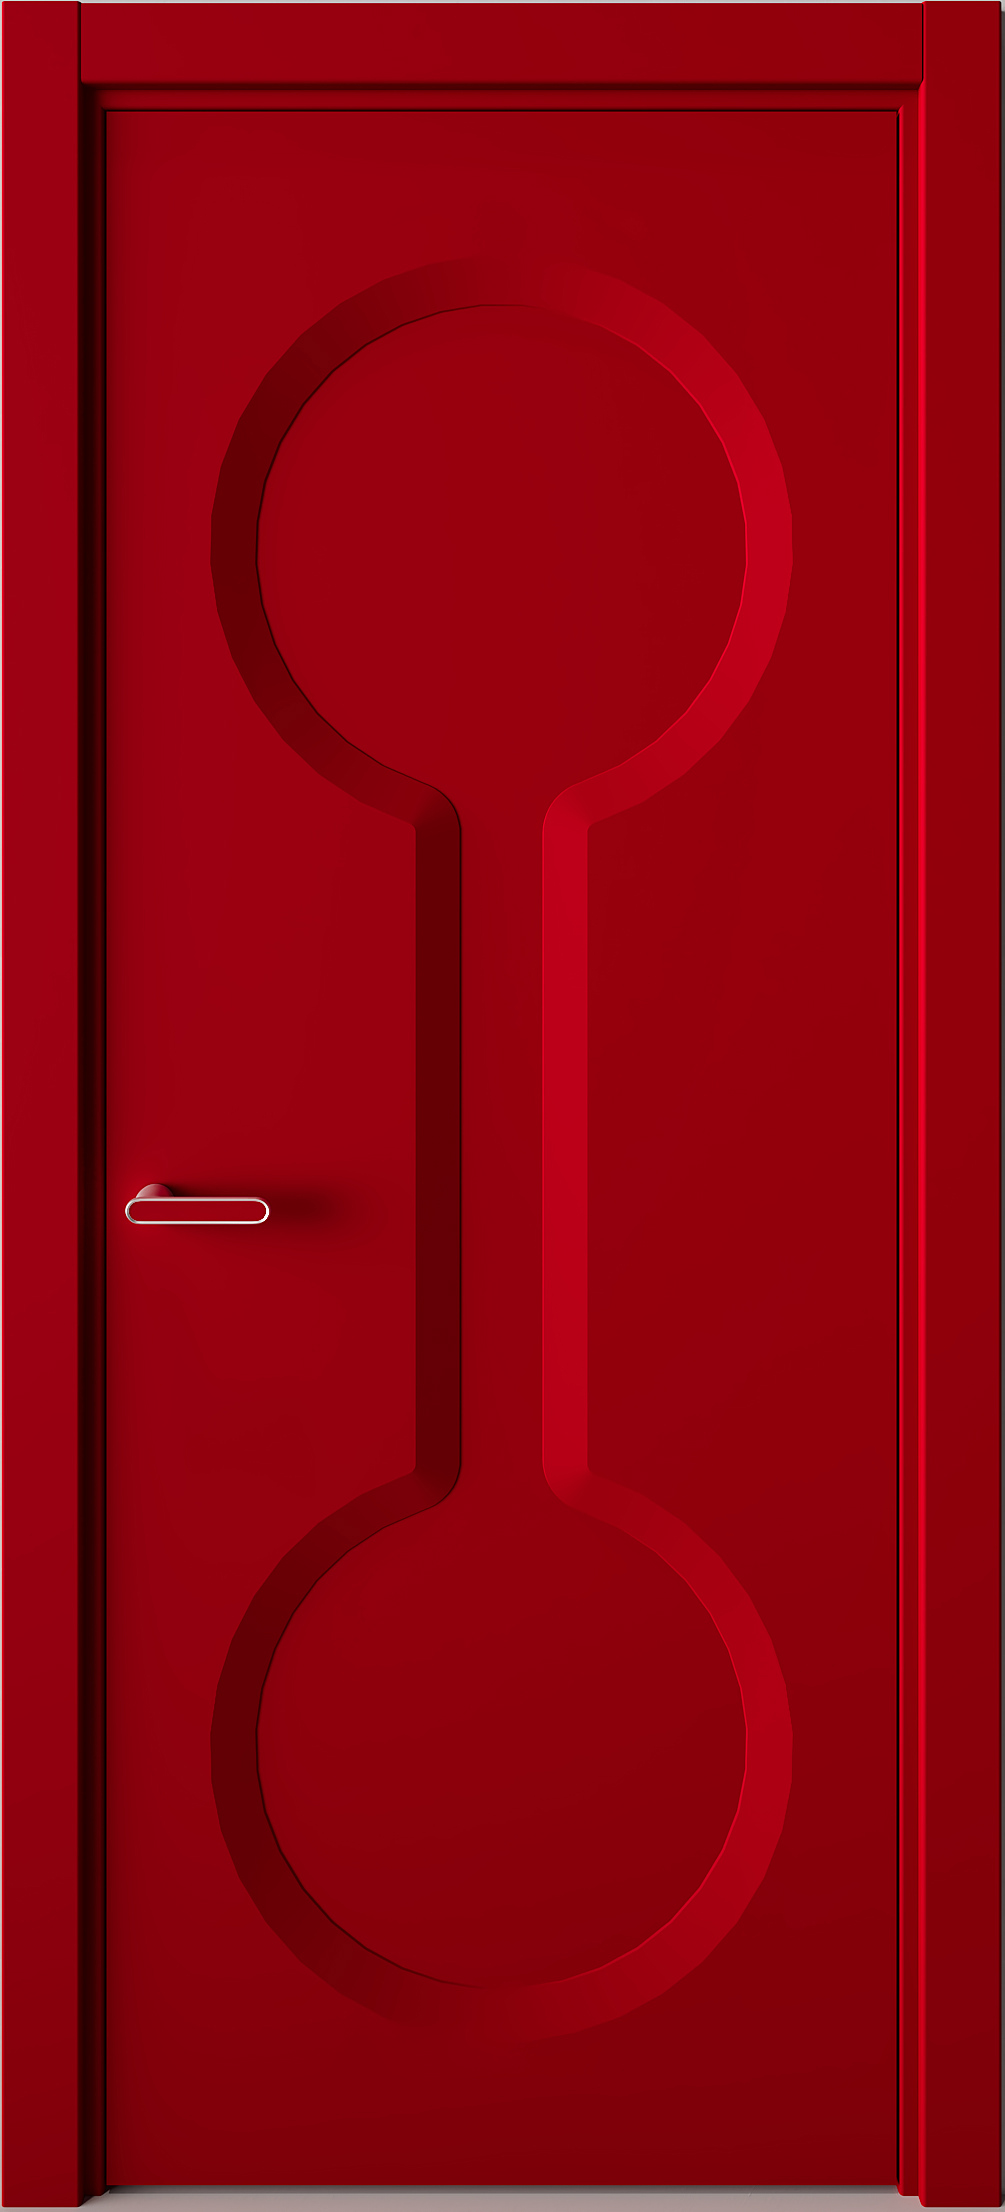 Межкомнатная дверь Солярис 175:КВ4 RAL